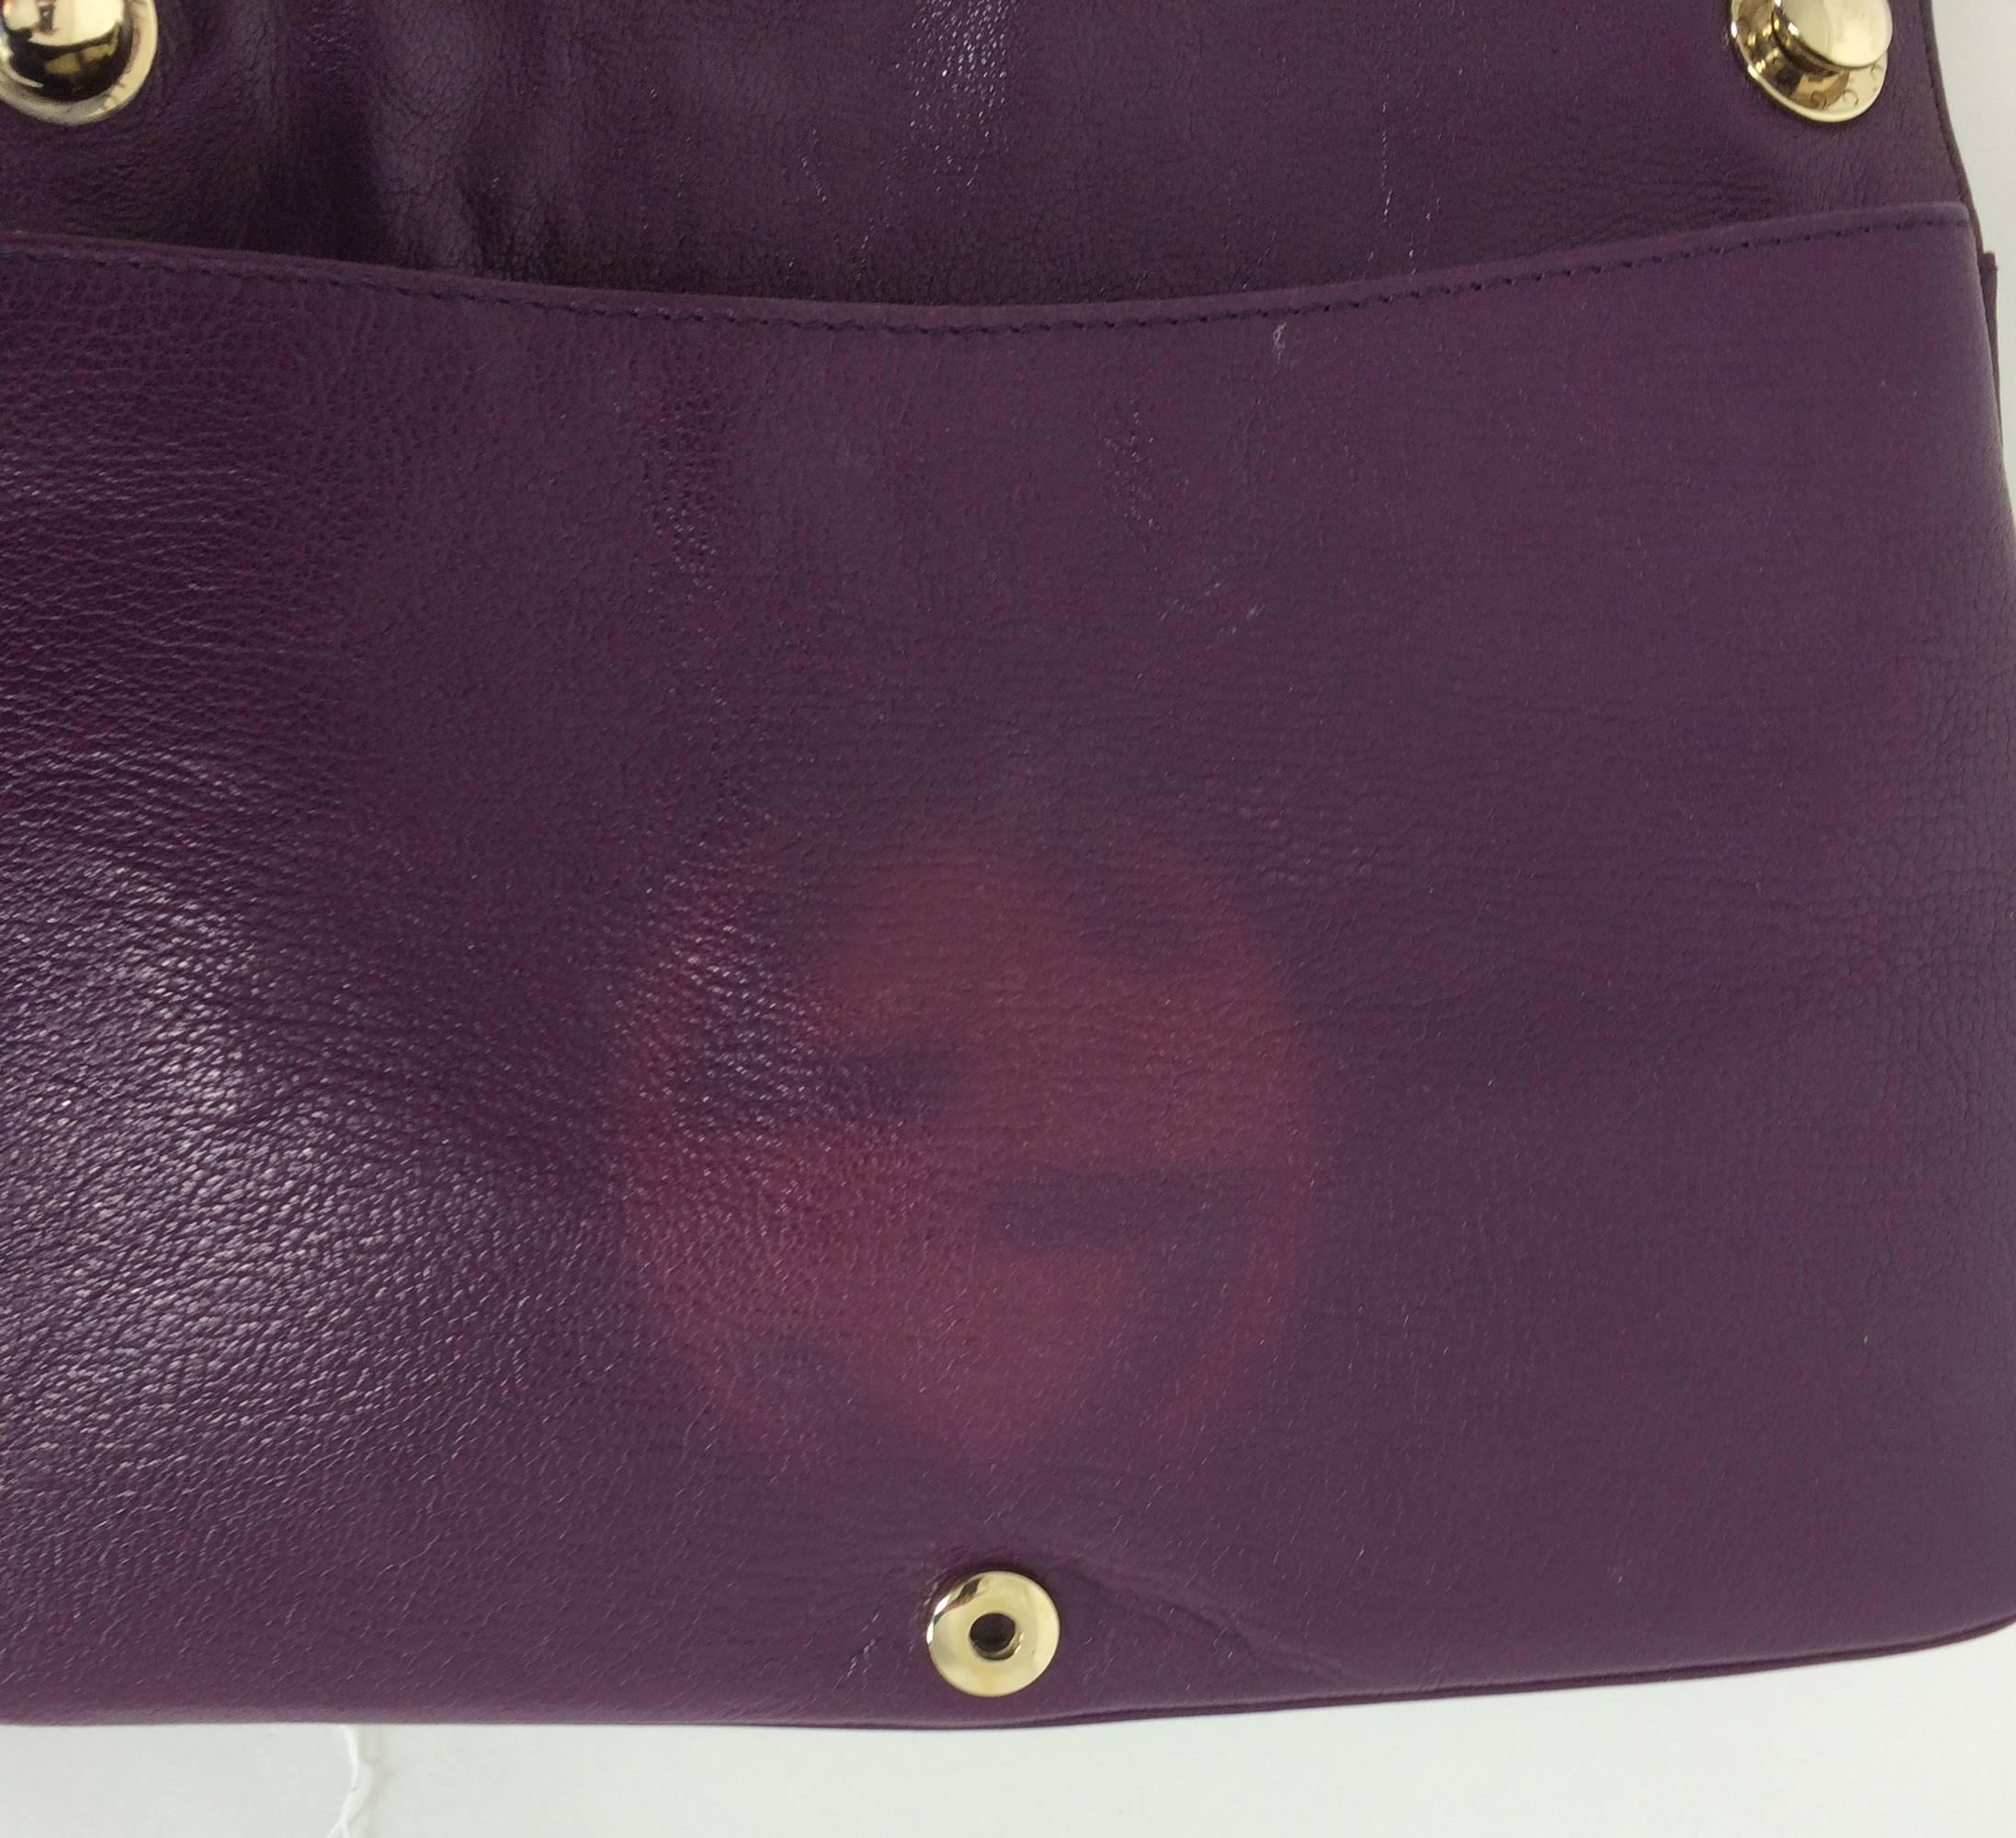 Gucci Blondie rare plum glazed leather shoulder handbag gold hardware 3